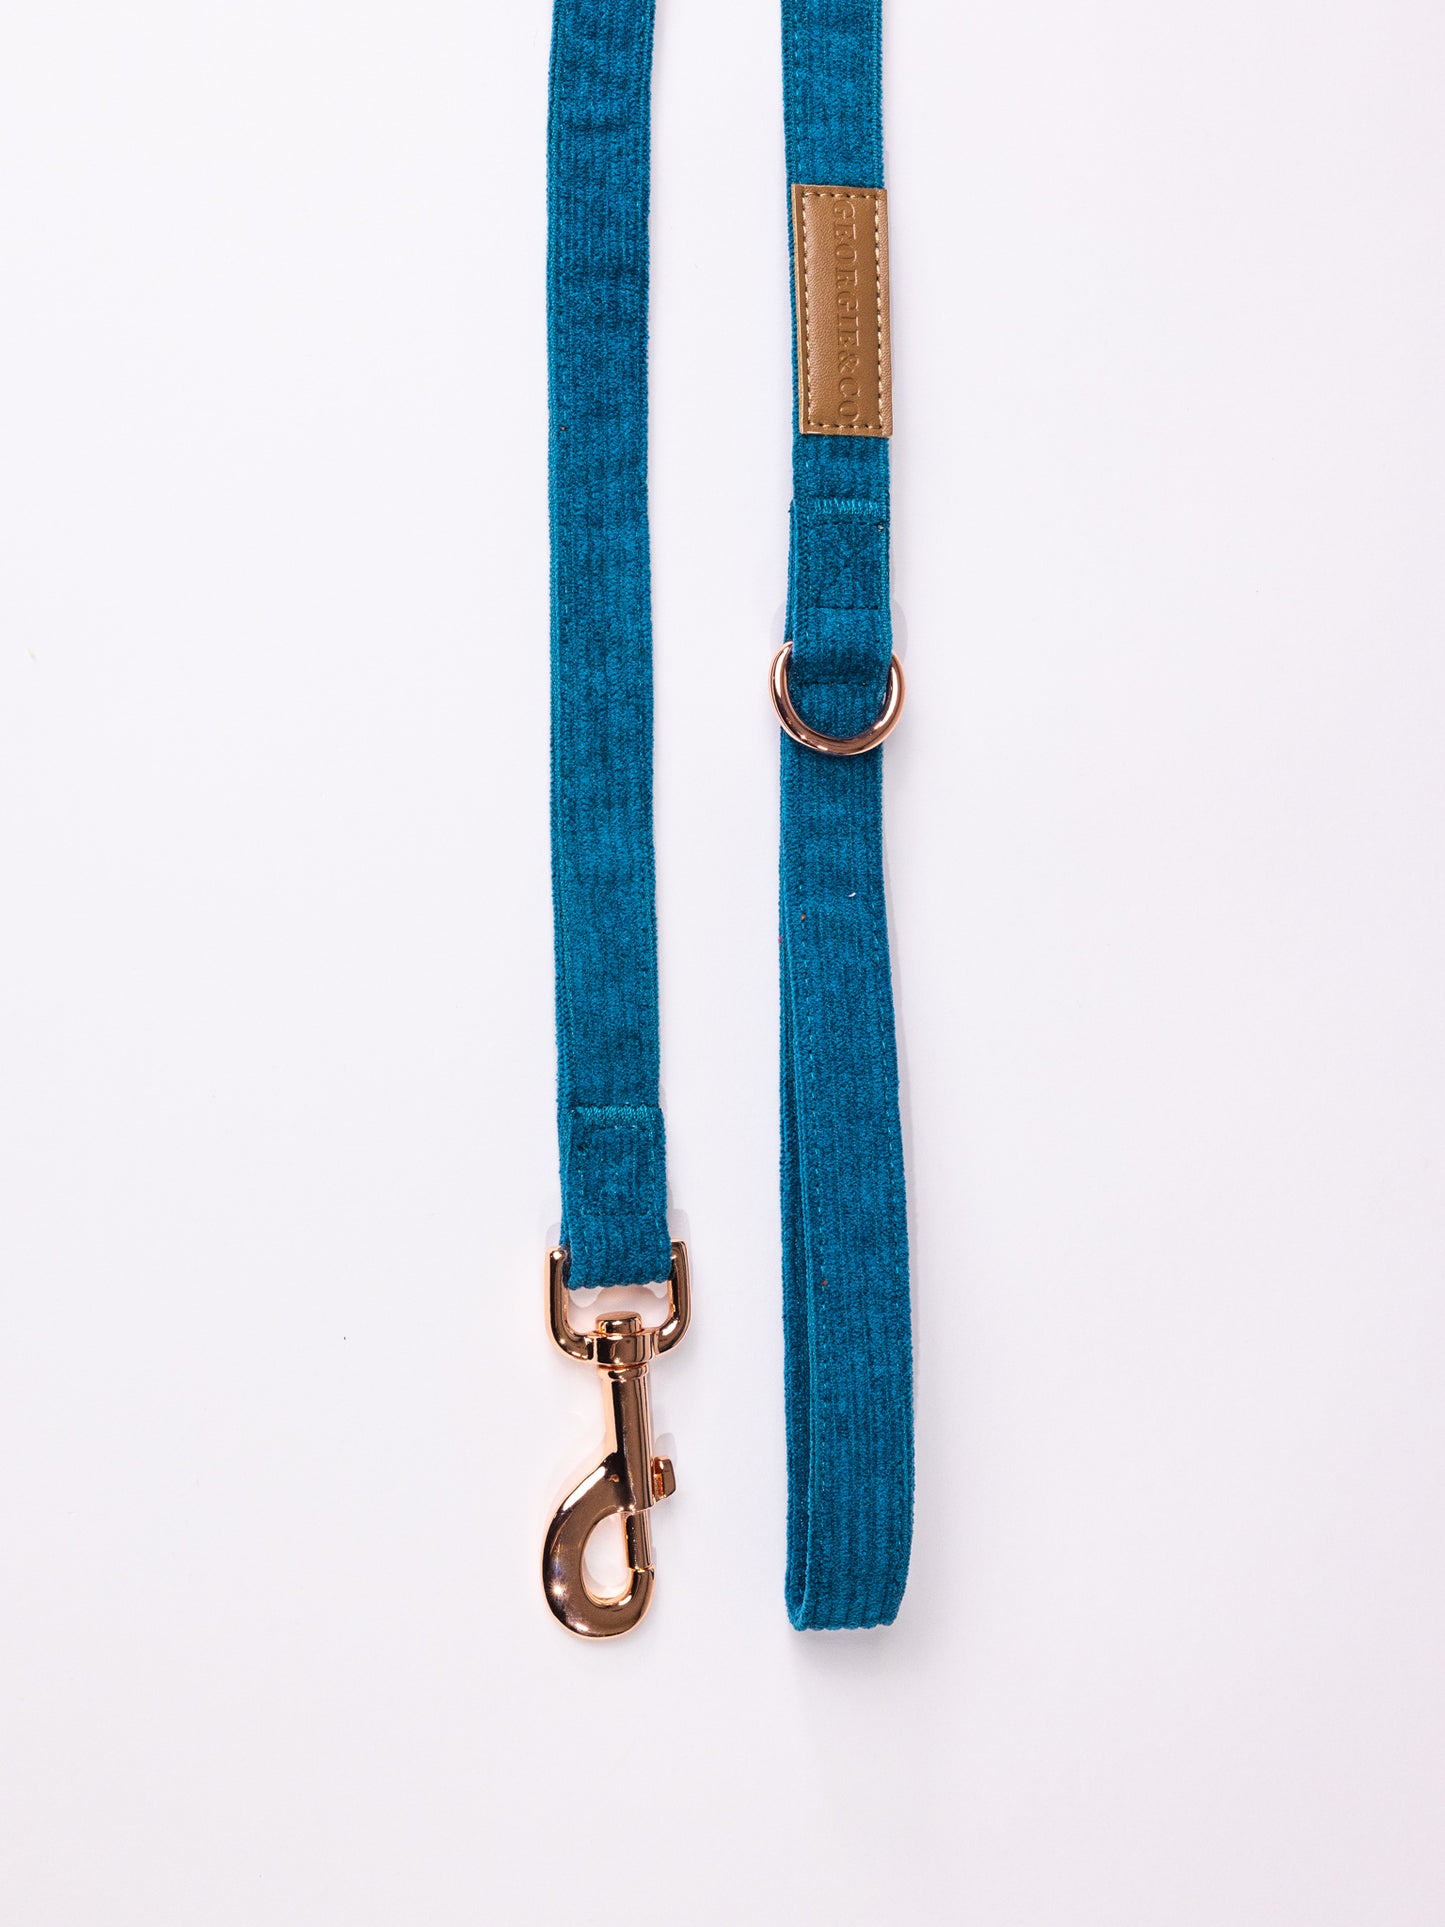 Barkley Luxury Blue Corduroy Personalised Harness Set